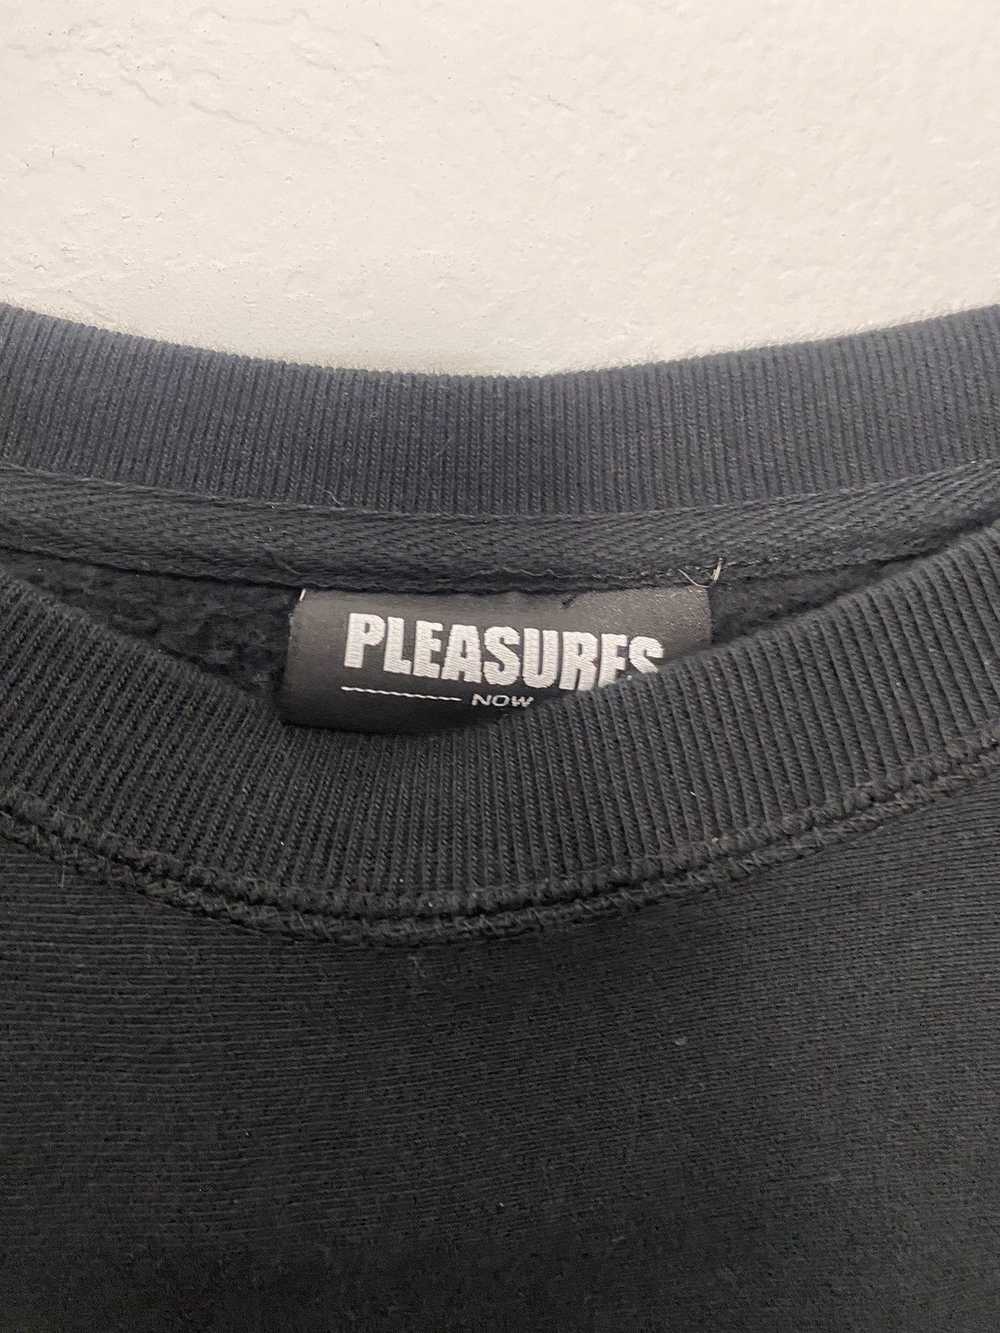 Pleasures Pleasures logo sweater - image 2